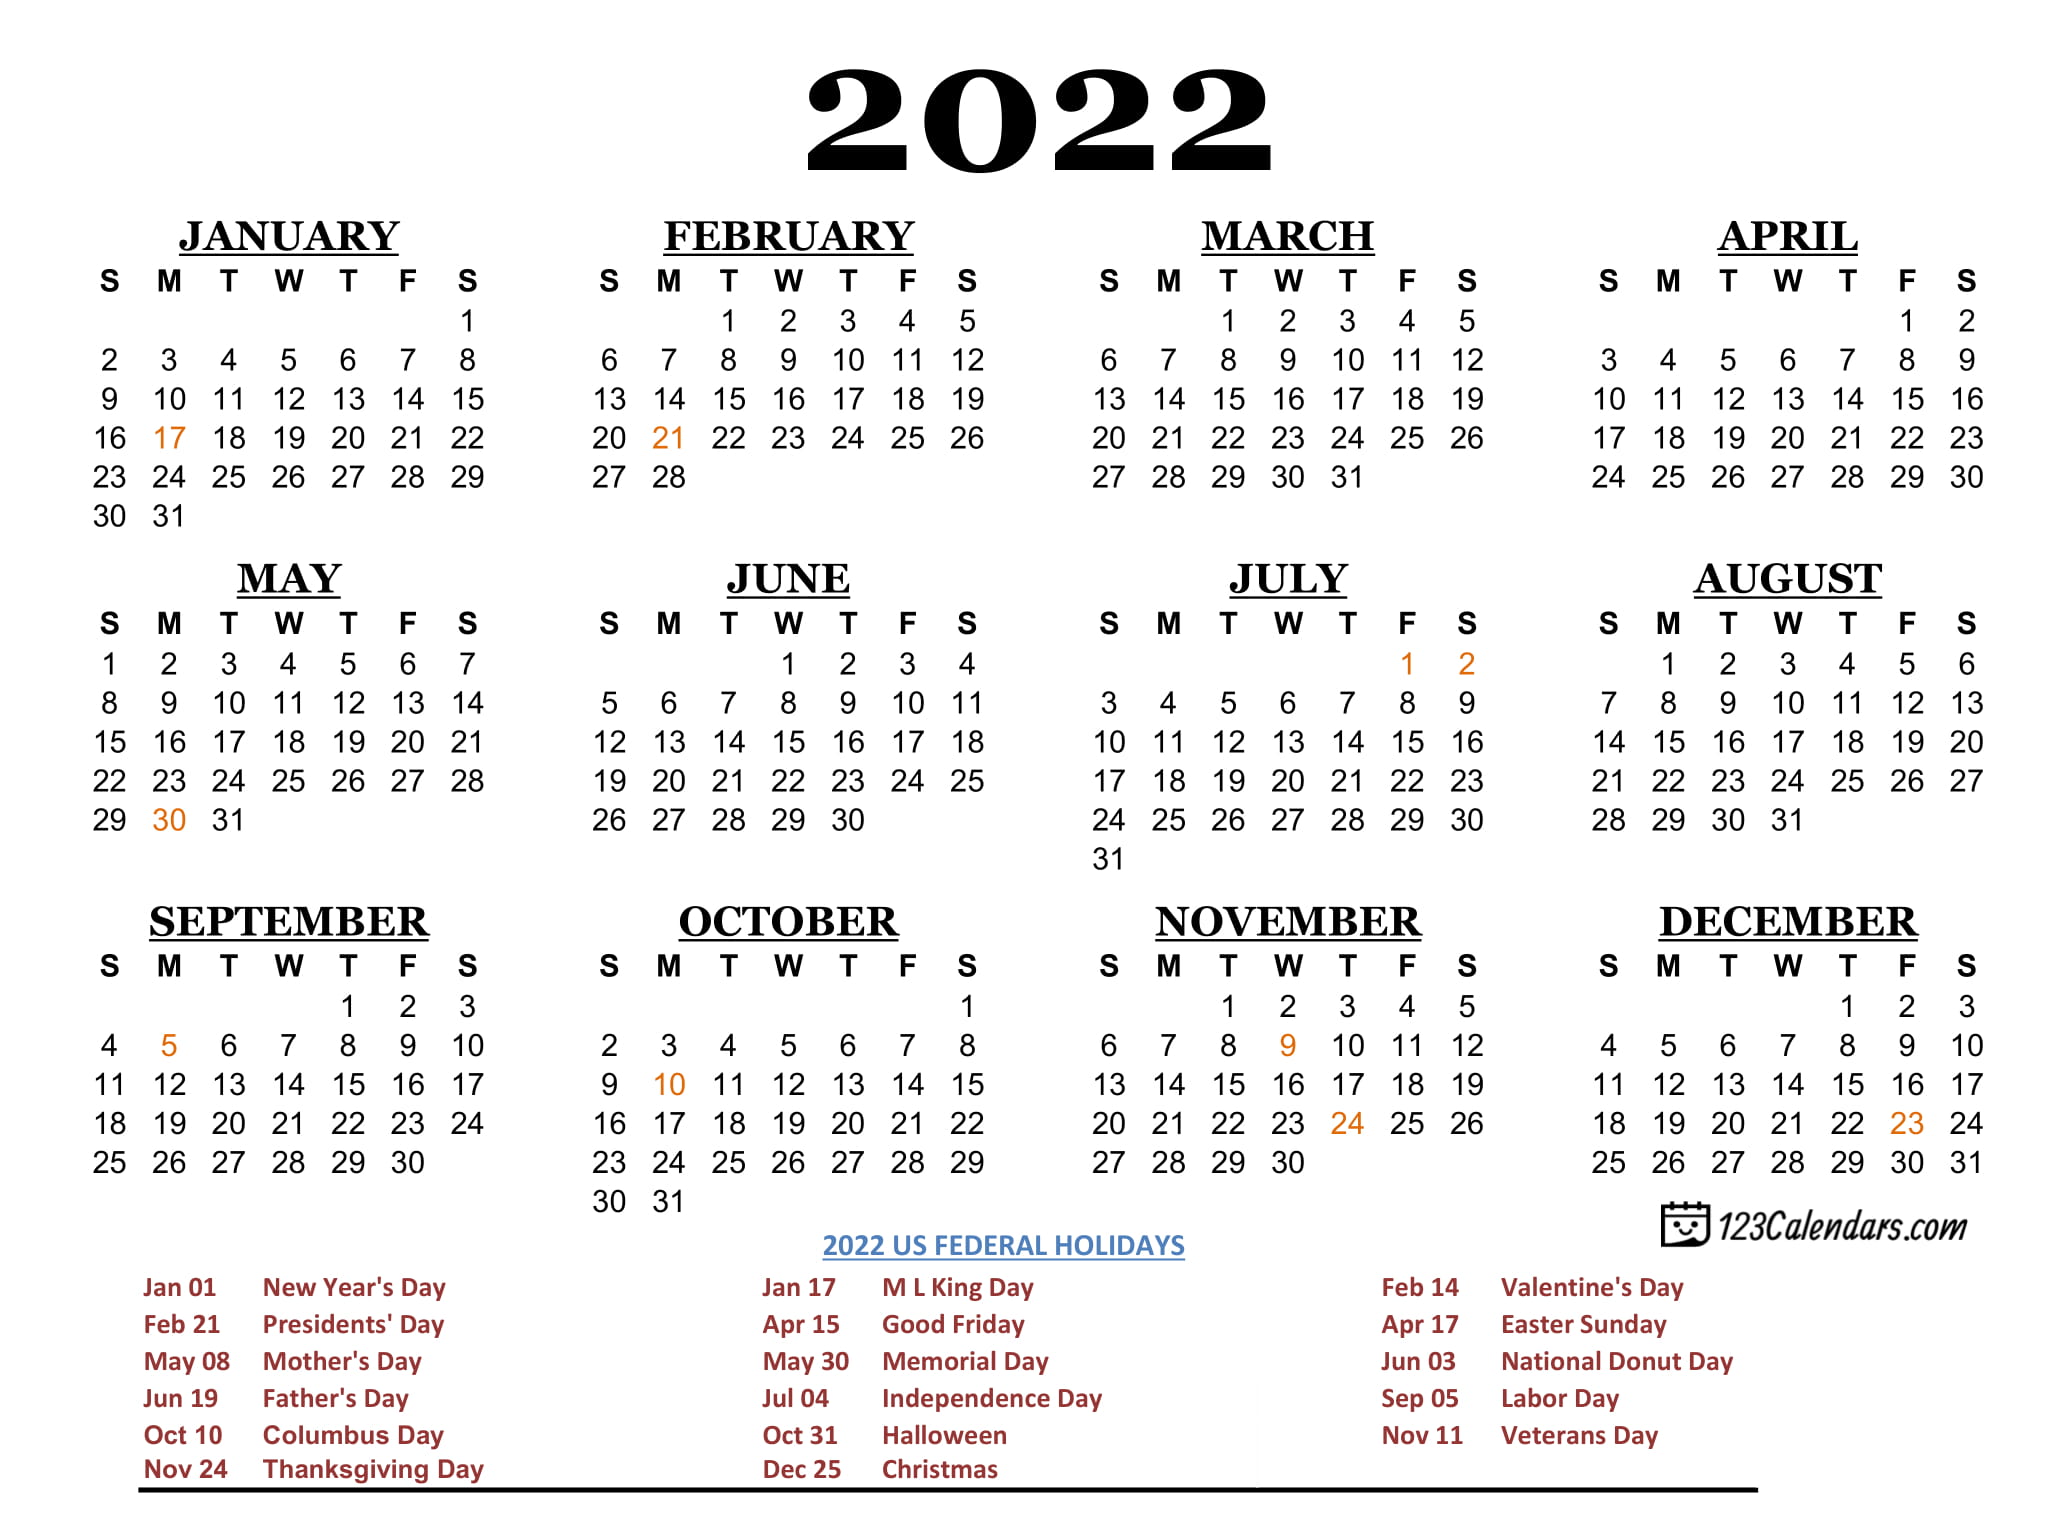 Time And Date 2022 Calendar Year 2022 Calendar Templates | 123Calendars.com